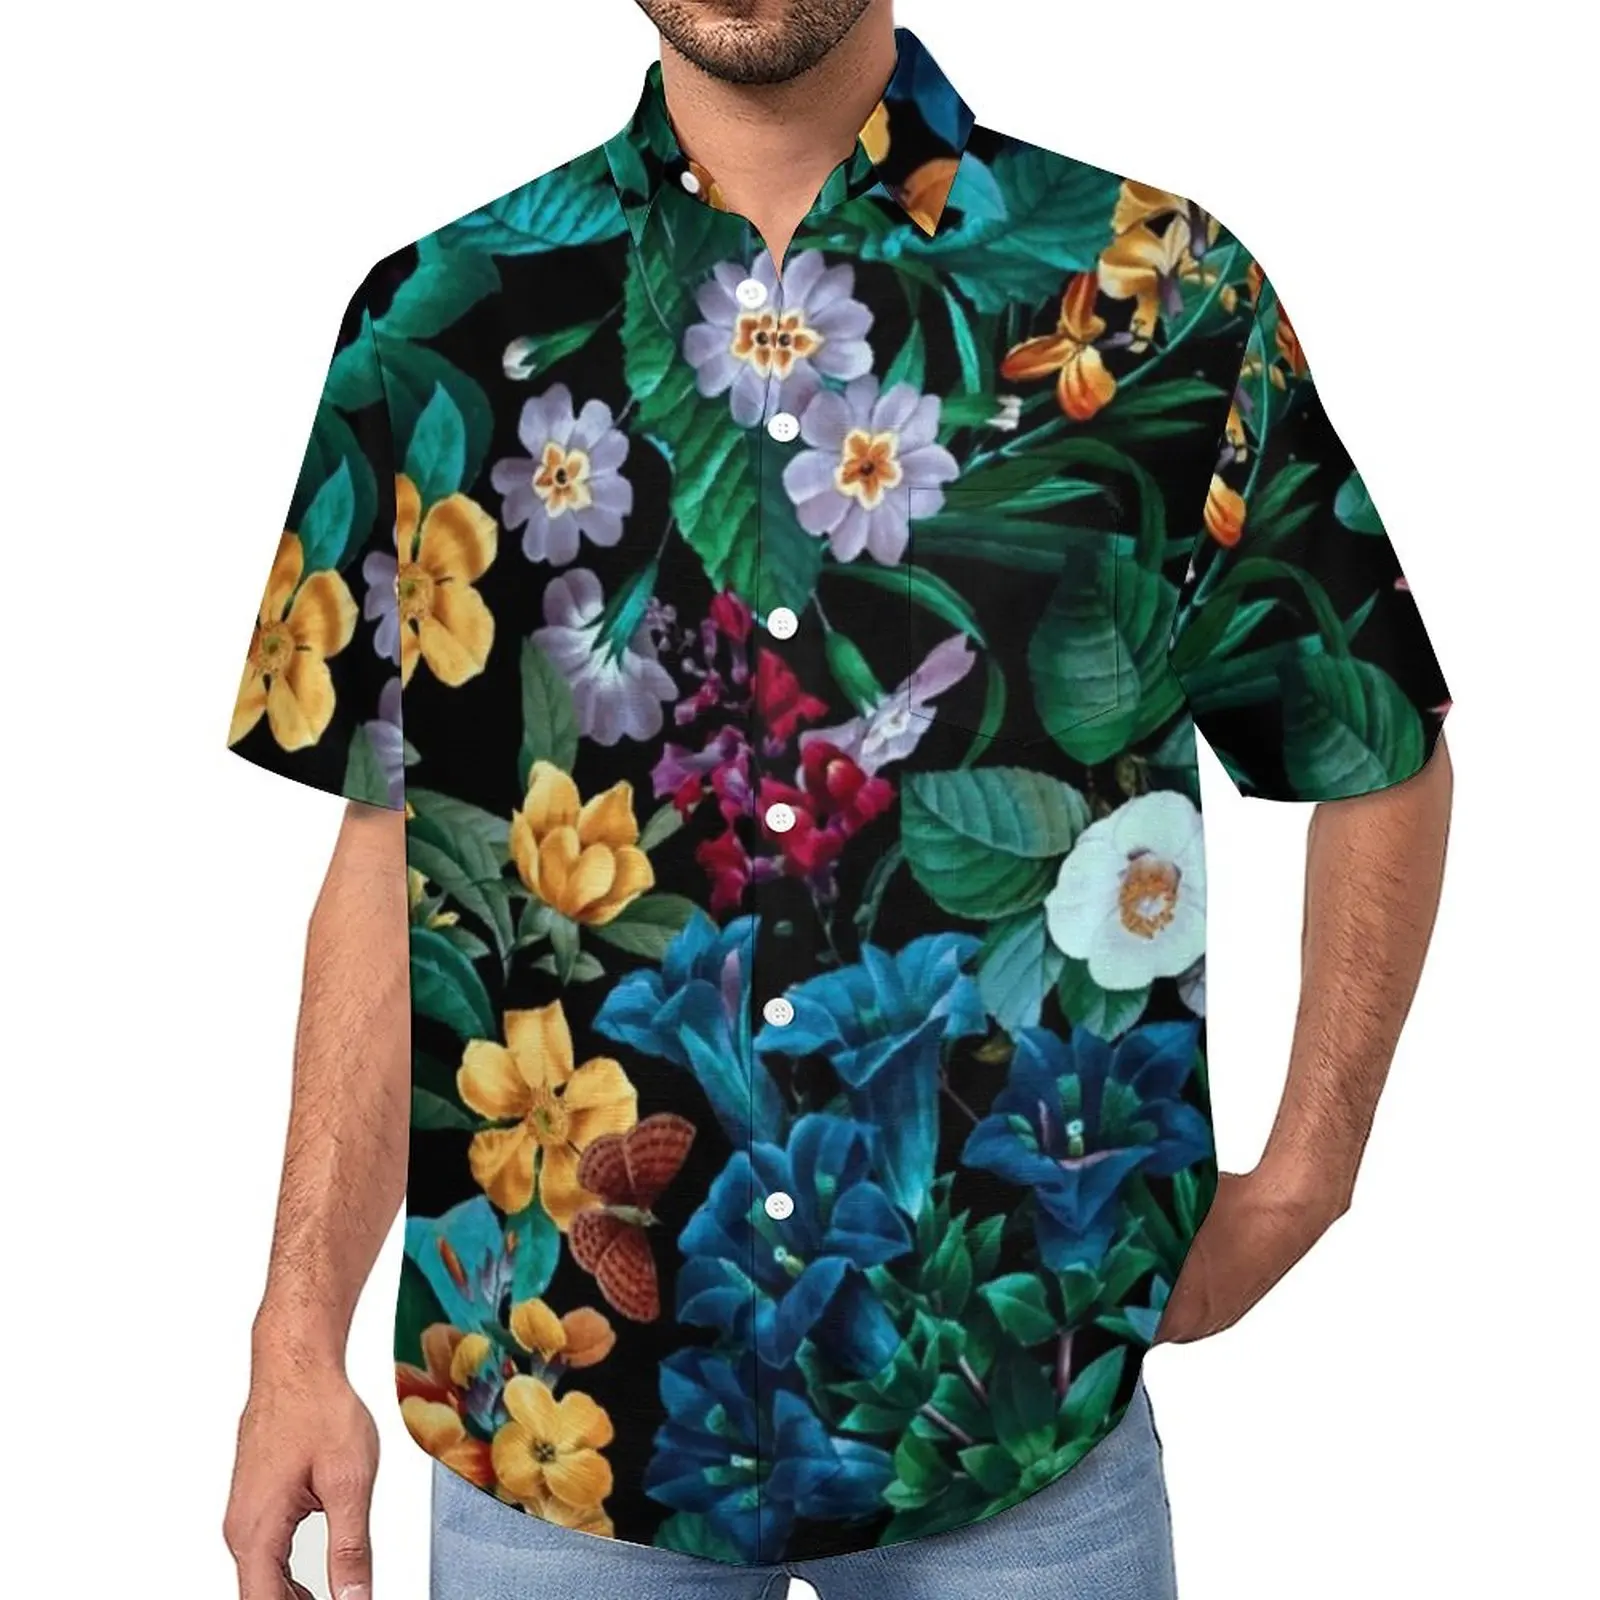 

Tropical Floral Print Casual Shirt Midnight Garden Vacation Loose Shirt Hawaiian Street Style Blouses Short-Sleeve Oversize Tops